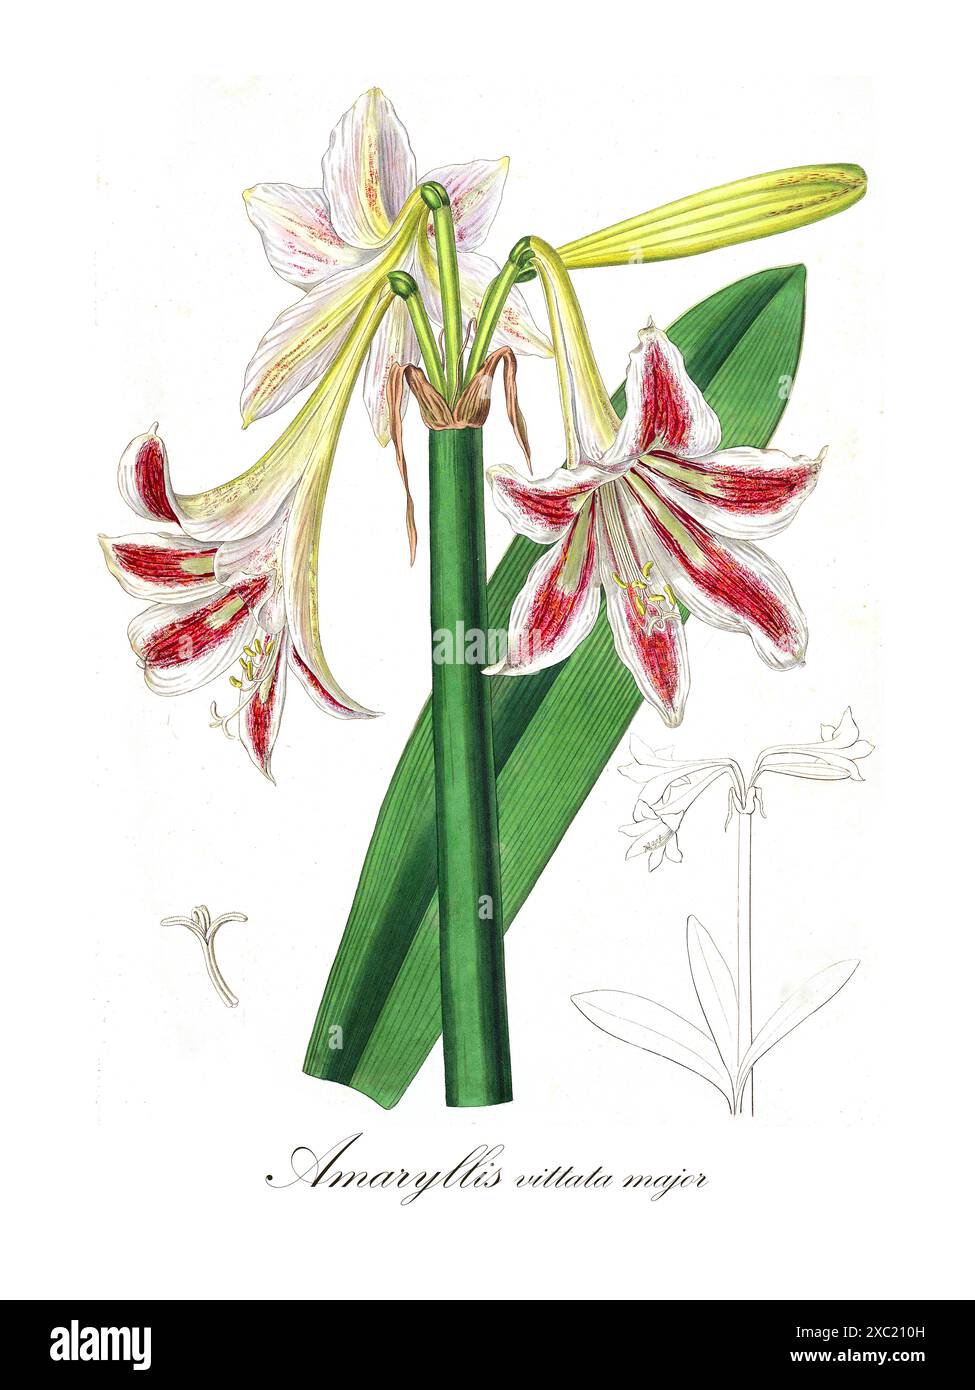 Farbenfrohe Vintage-botanische Illustration von Amaryllis vittata Major aus Collectanea botanica Or, Figuren und botanische Illustrationen von Seltenheit und Kurio Stockfoto